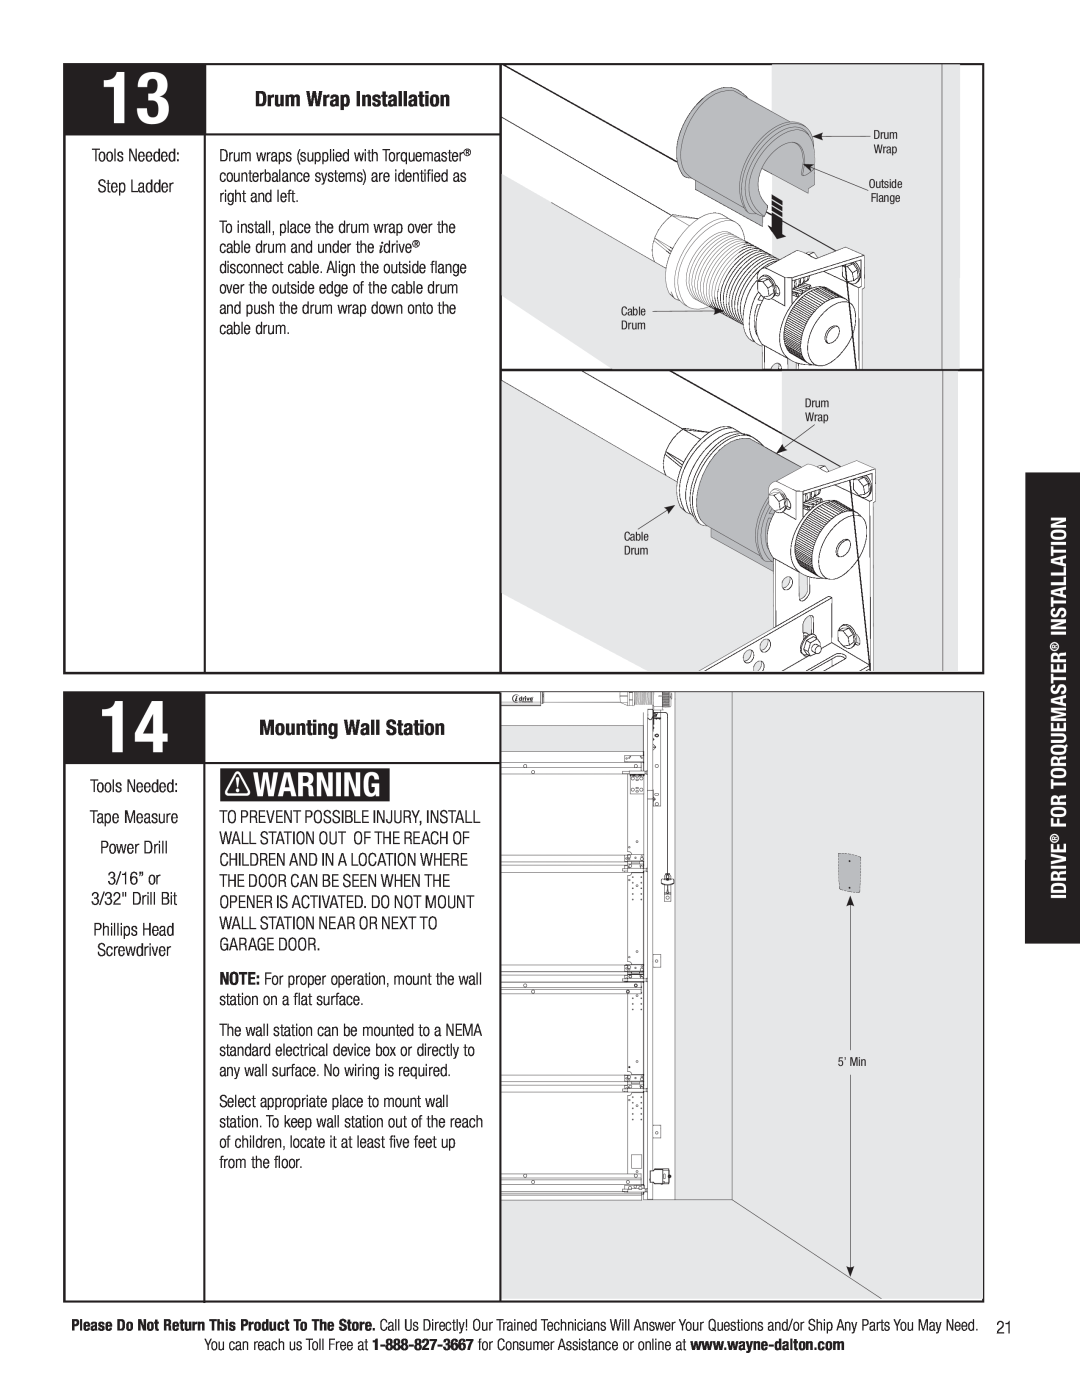 Wayne-Dalton 3790-Z installation instructions Drum Wrap Installation, Mounting Wall Station 